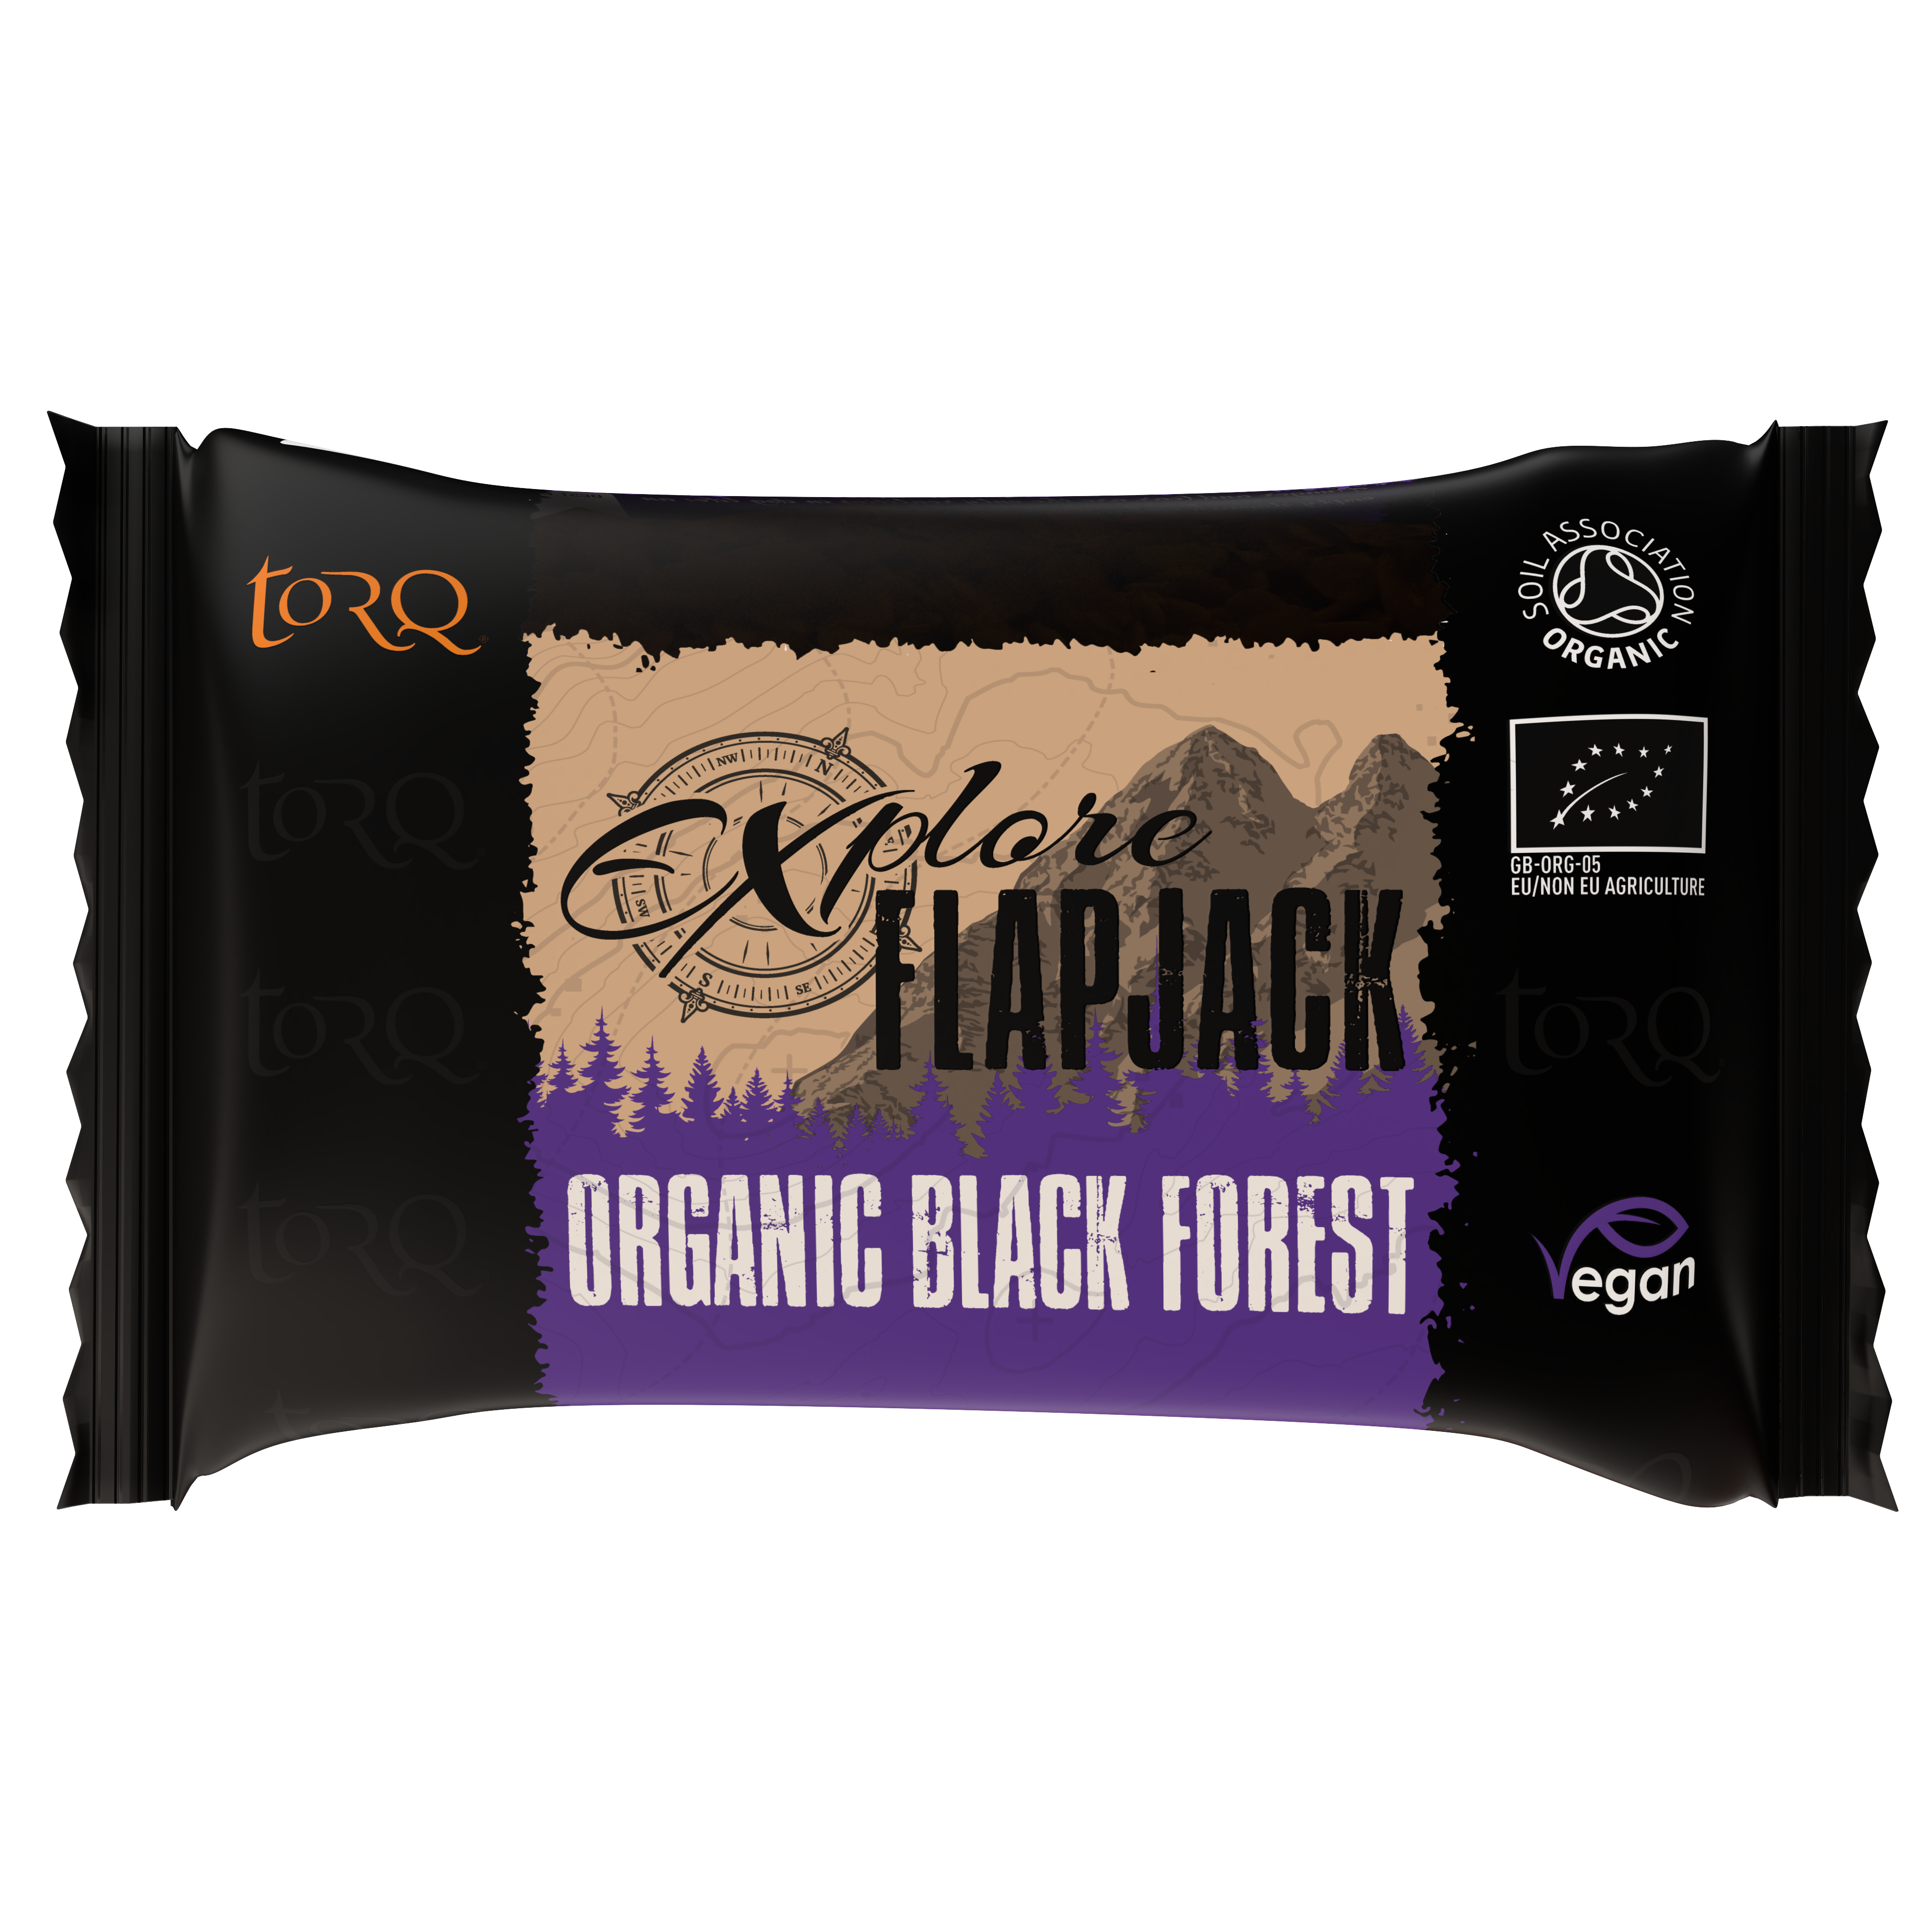 Torq Explore Flapjack - Organic Black Forest